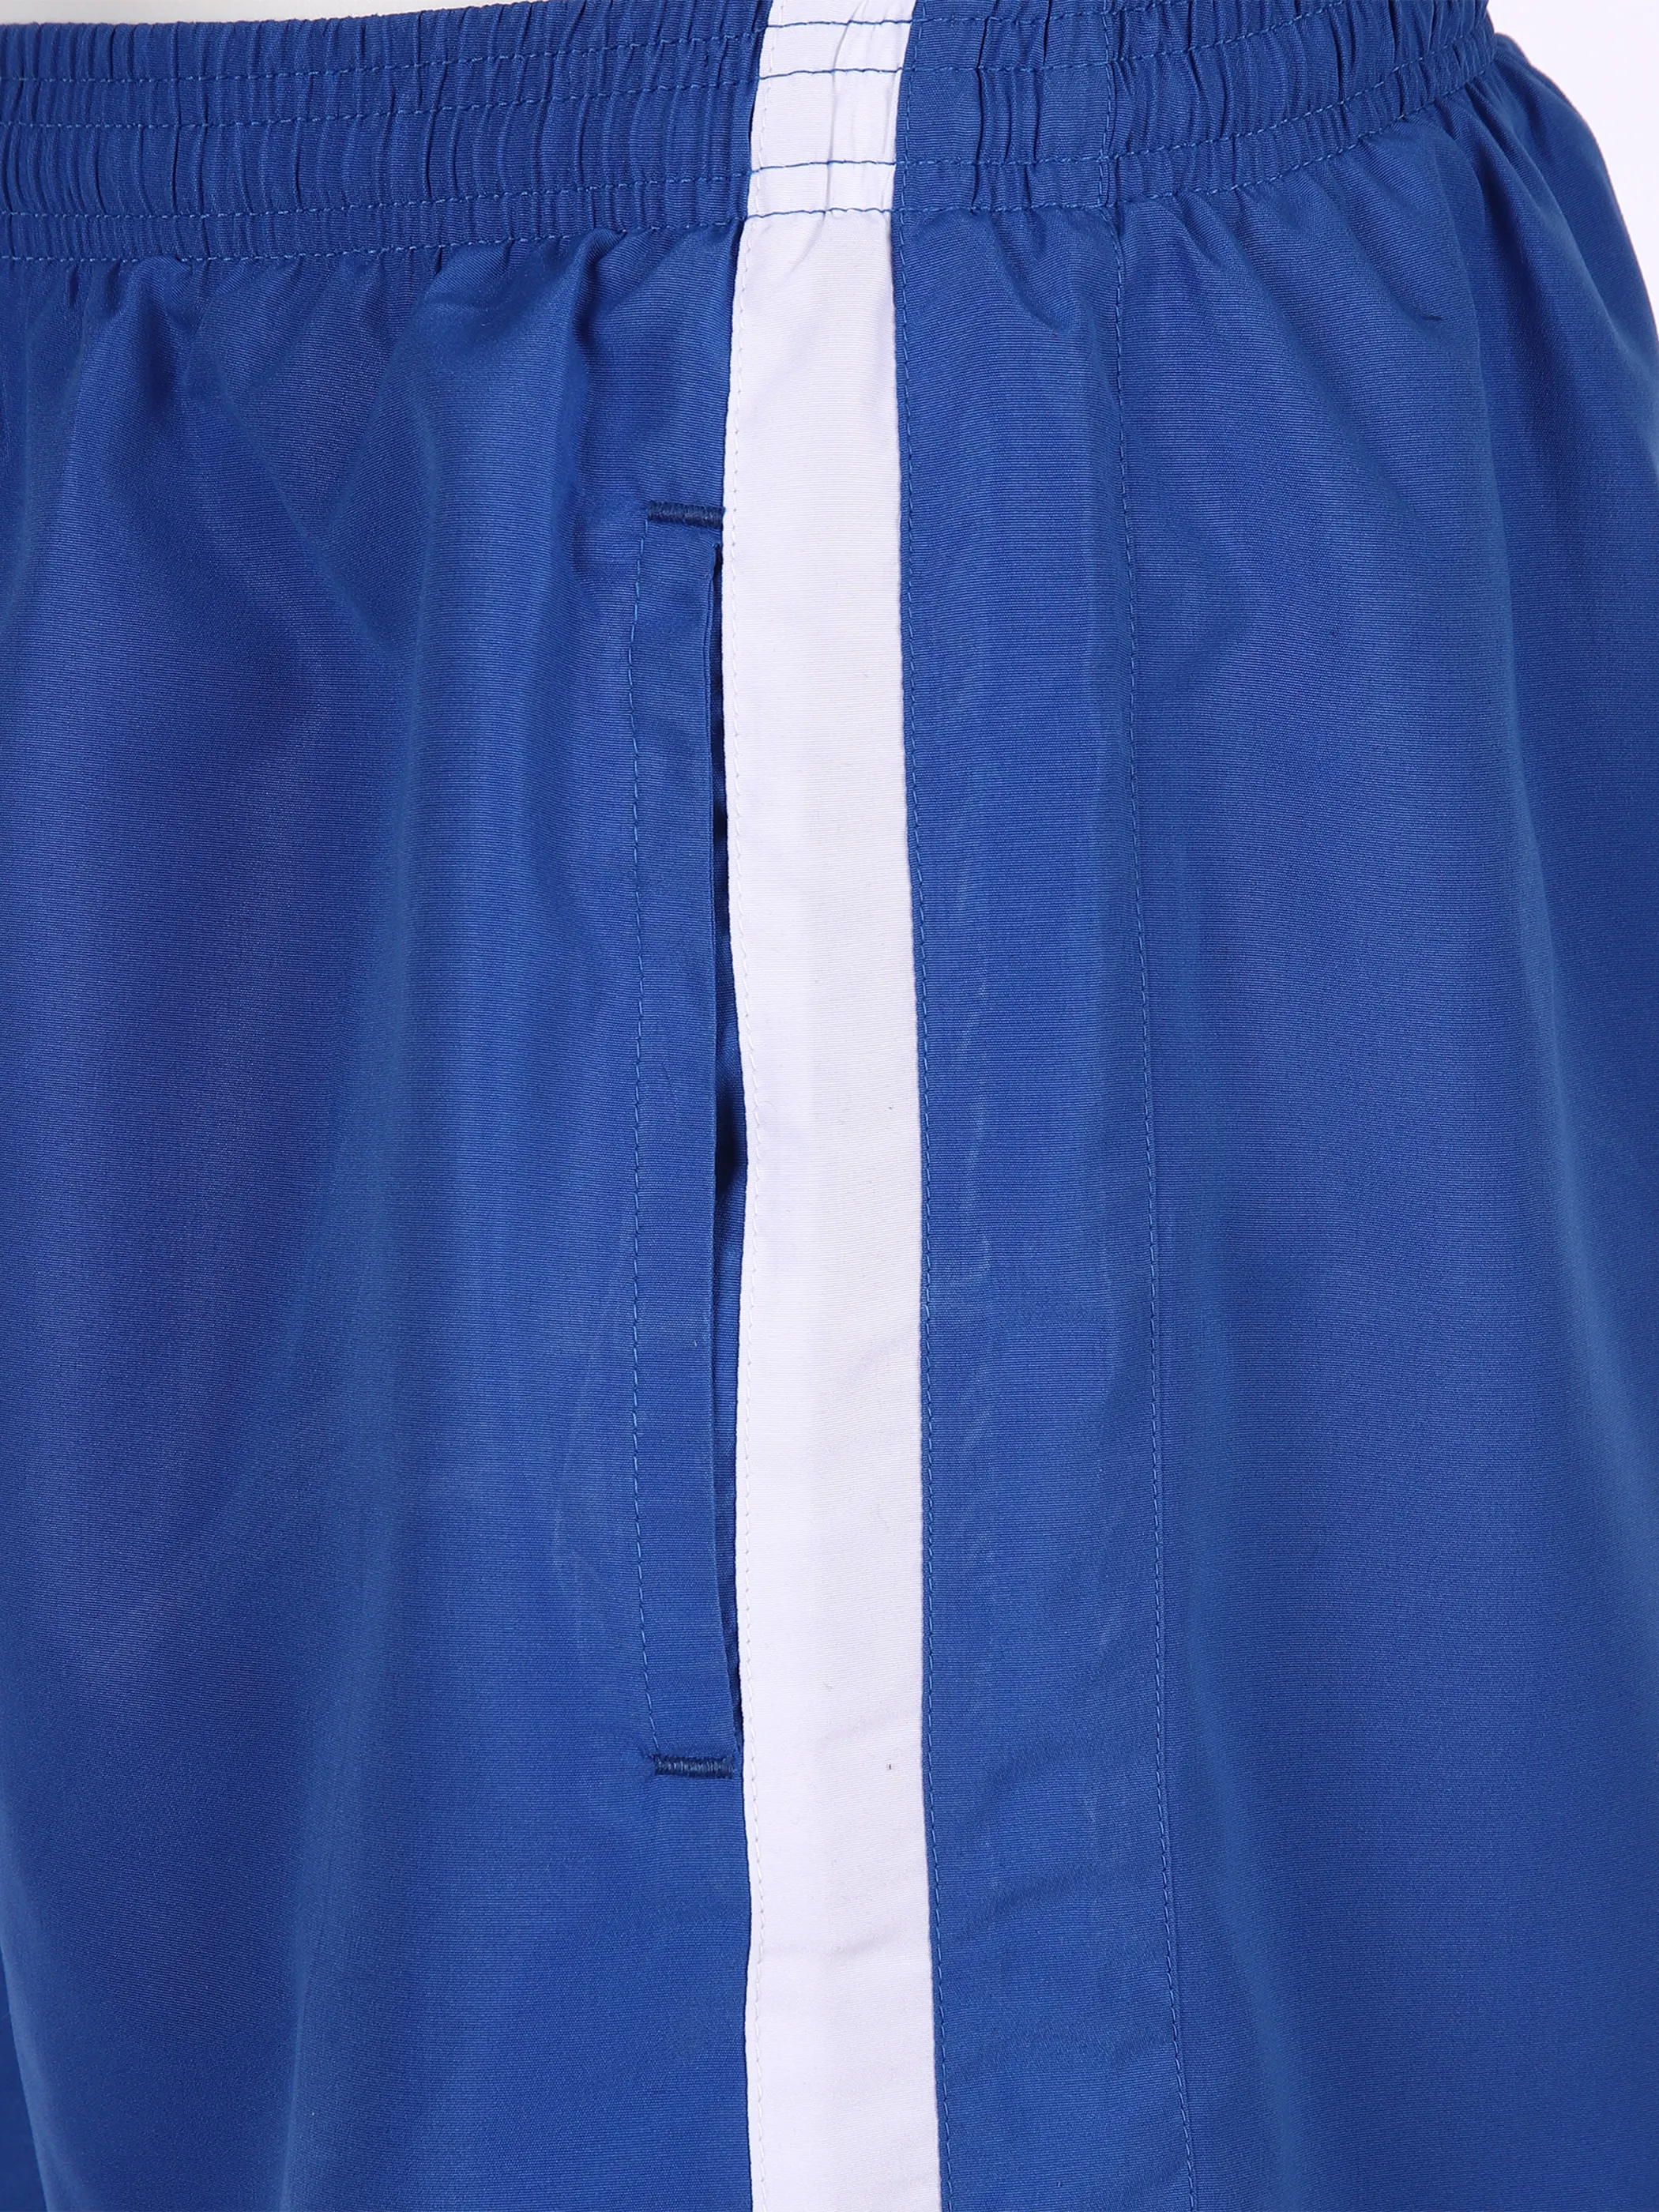 Grinario Sports He-Micro-Short Blau 839802 ROYAL/WHIT 3